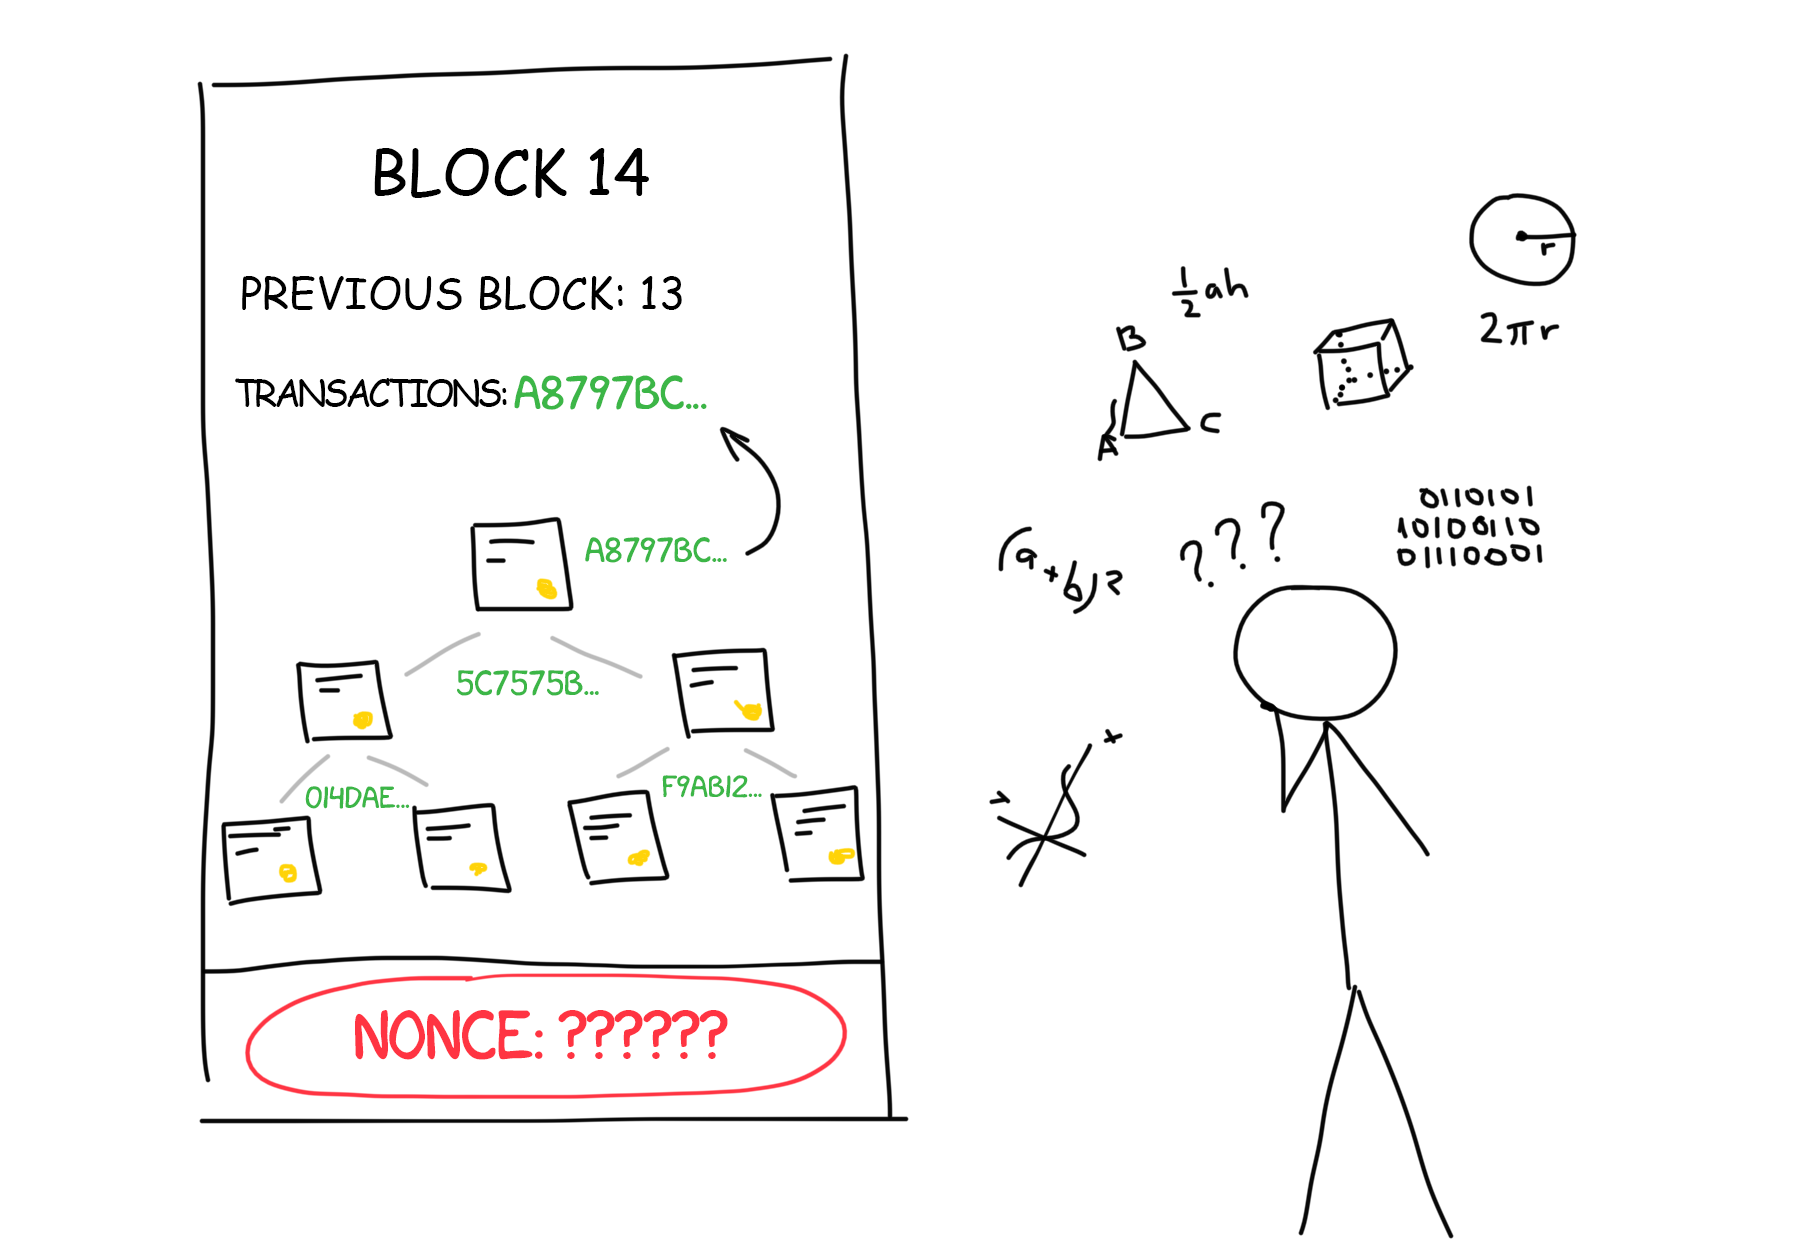 Blockchain Info